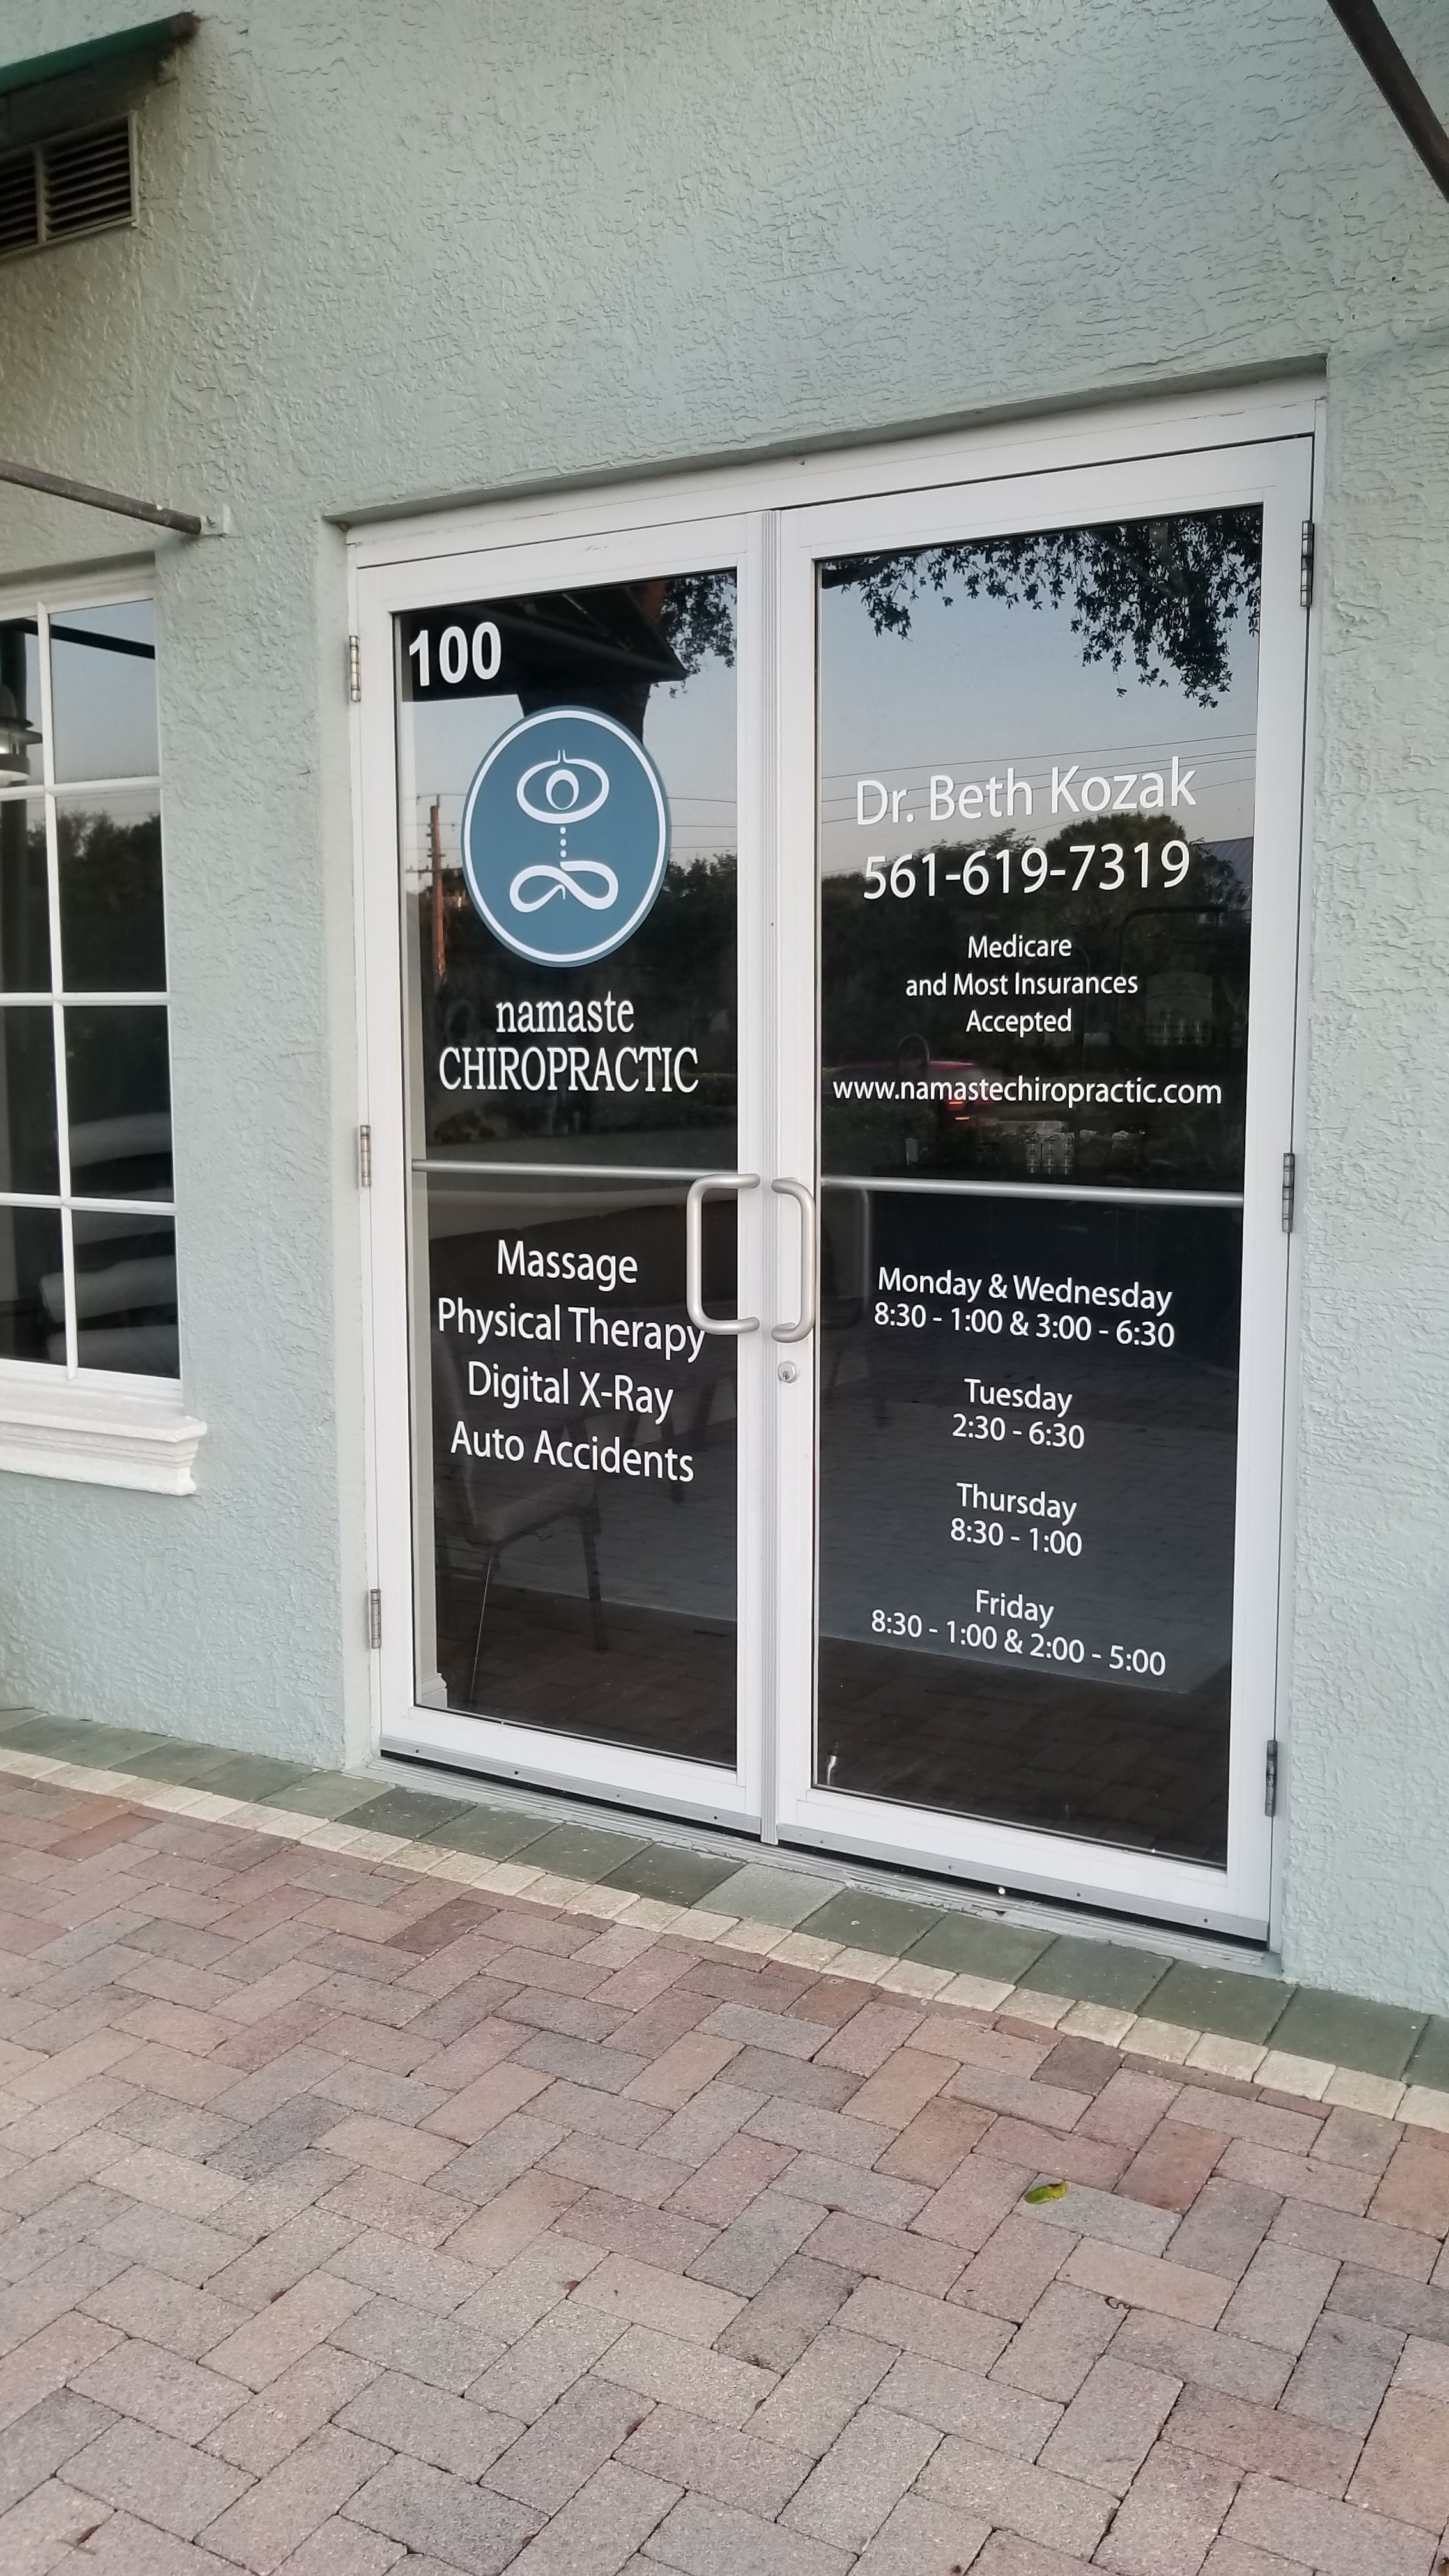 Namaste Chiropractic - Palm Beach Gardens, FL, US, benefit of chiropractic